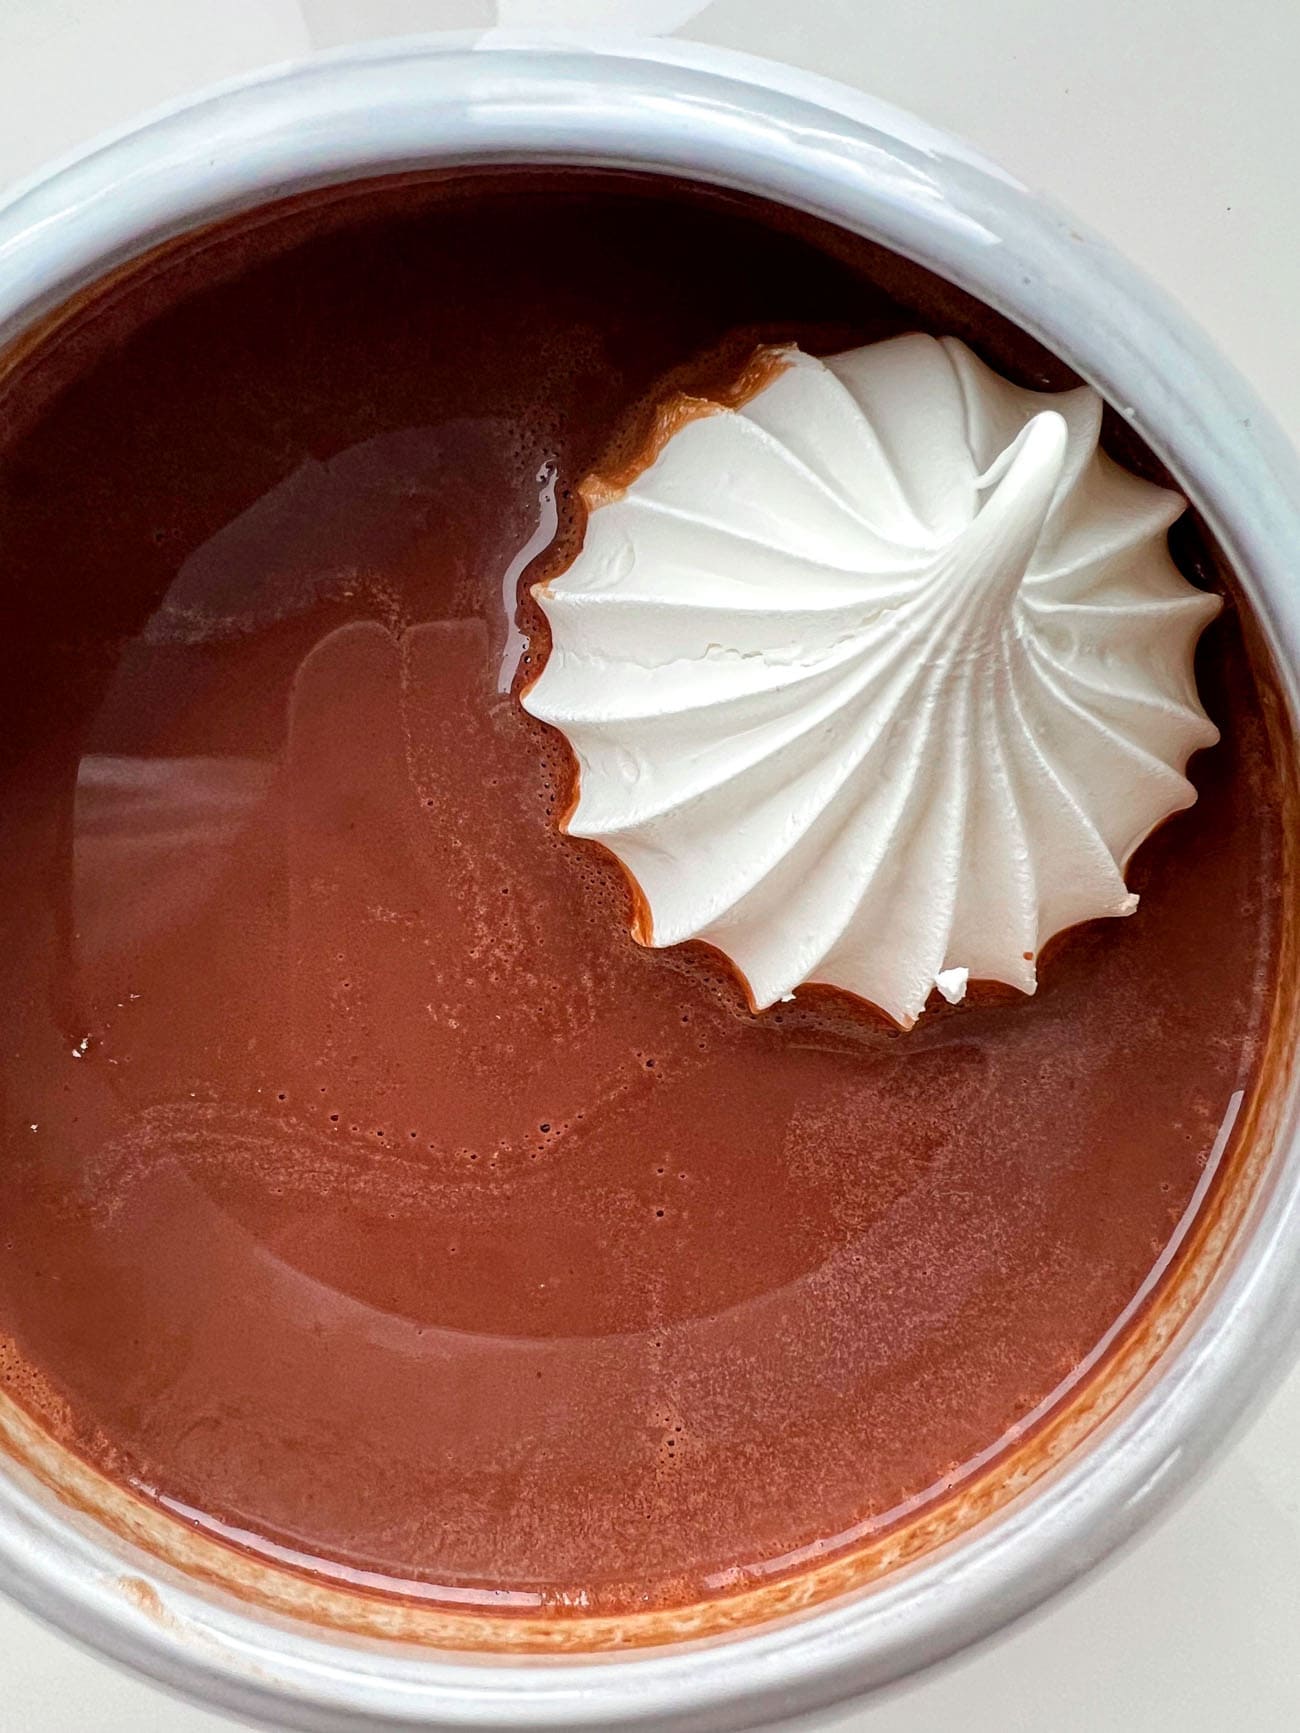 meringues in hot chocolate